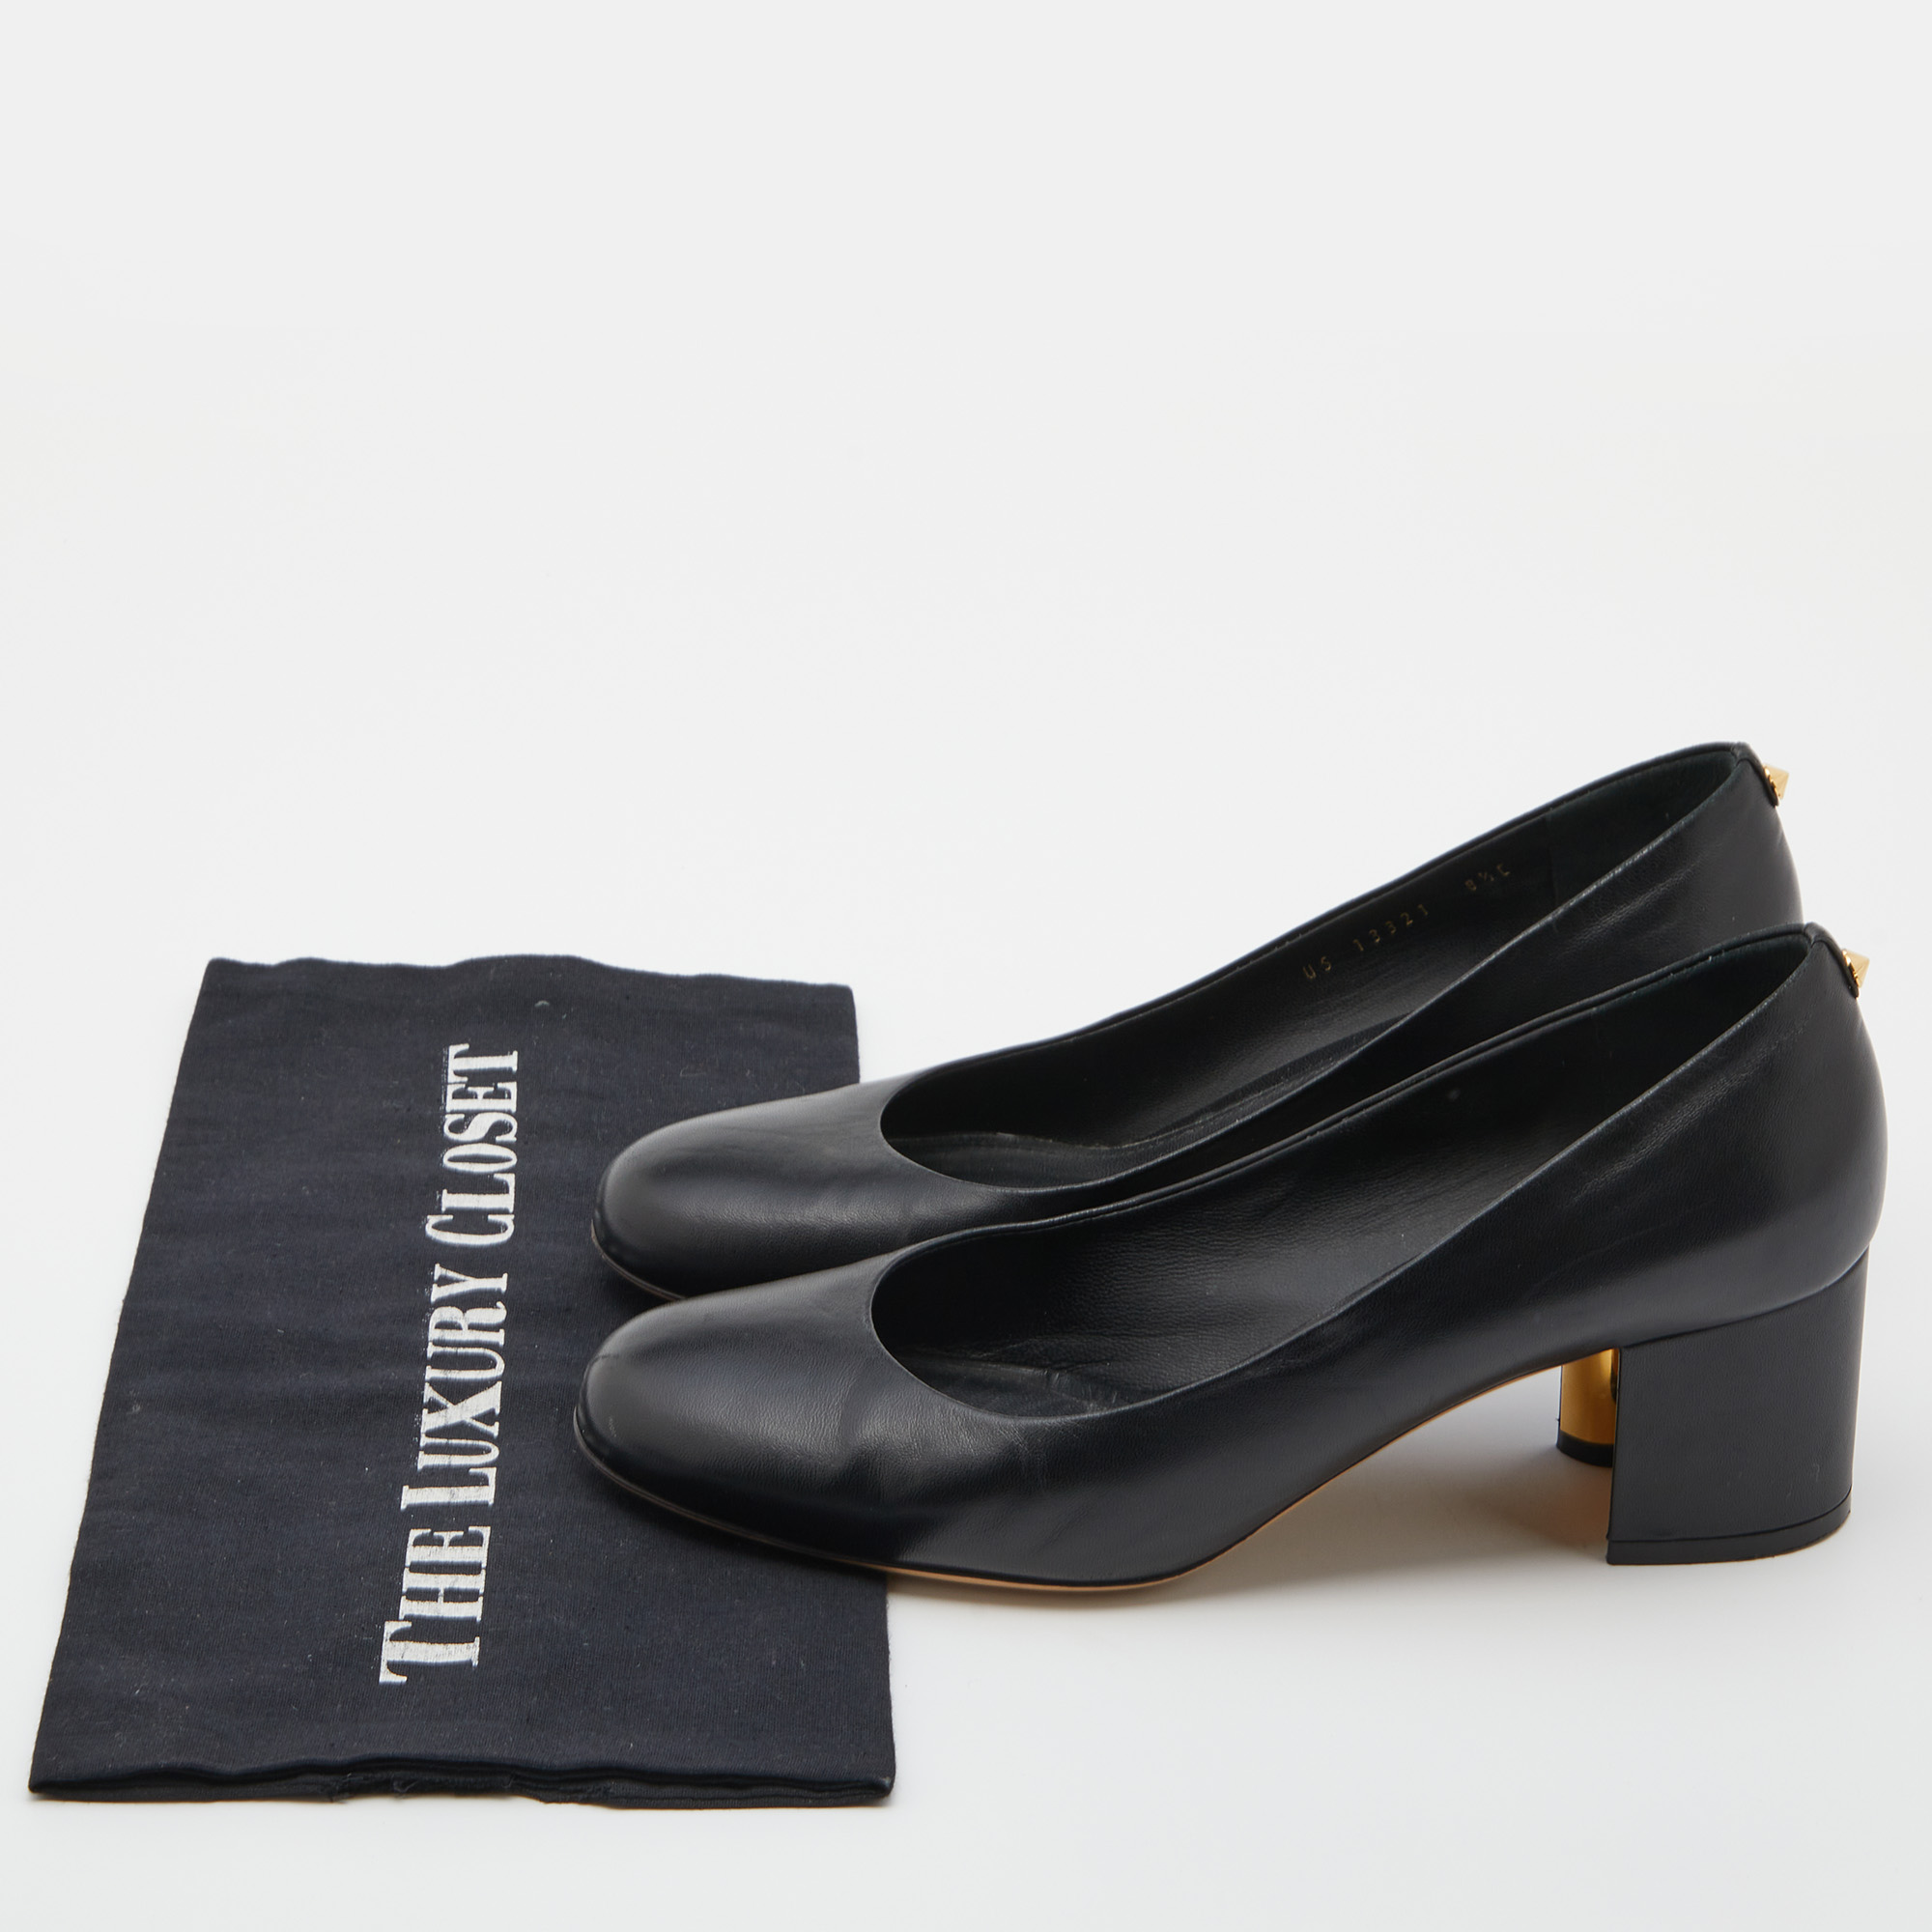 Salvatore Ferragamo Black Leather Block Heel Pumps Size 39